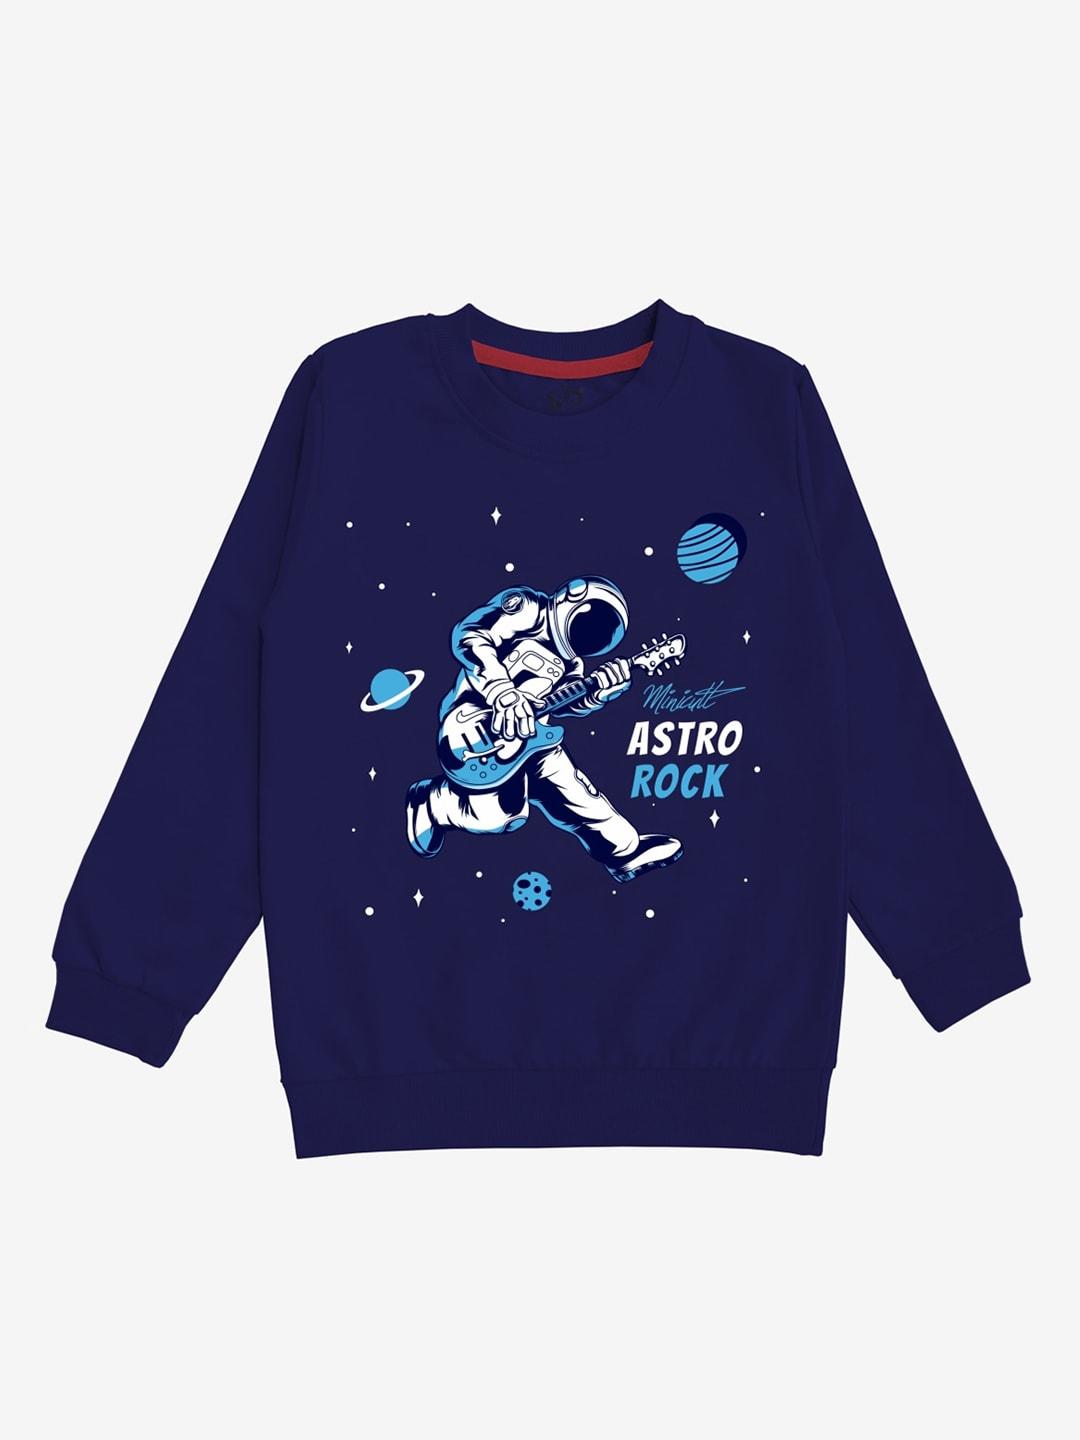 x2o unisex kids navy blue printed sweatshirt